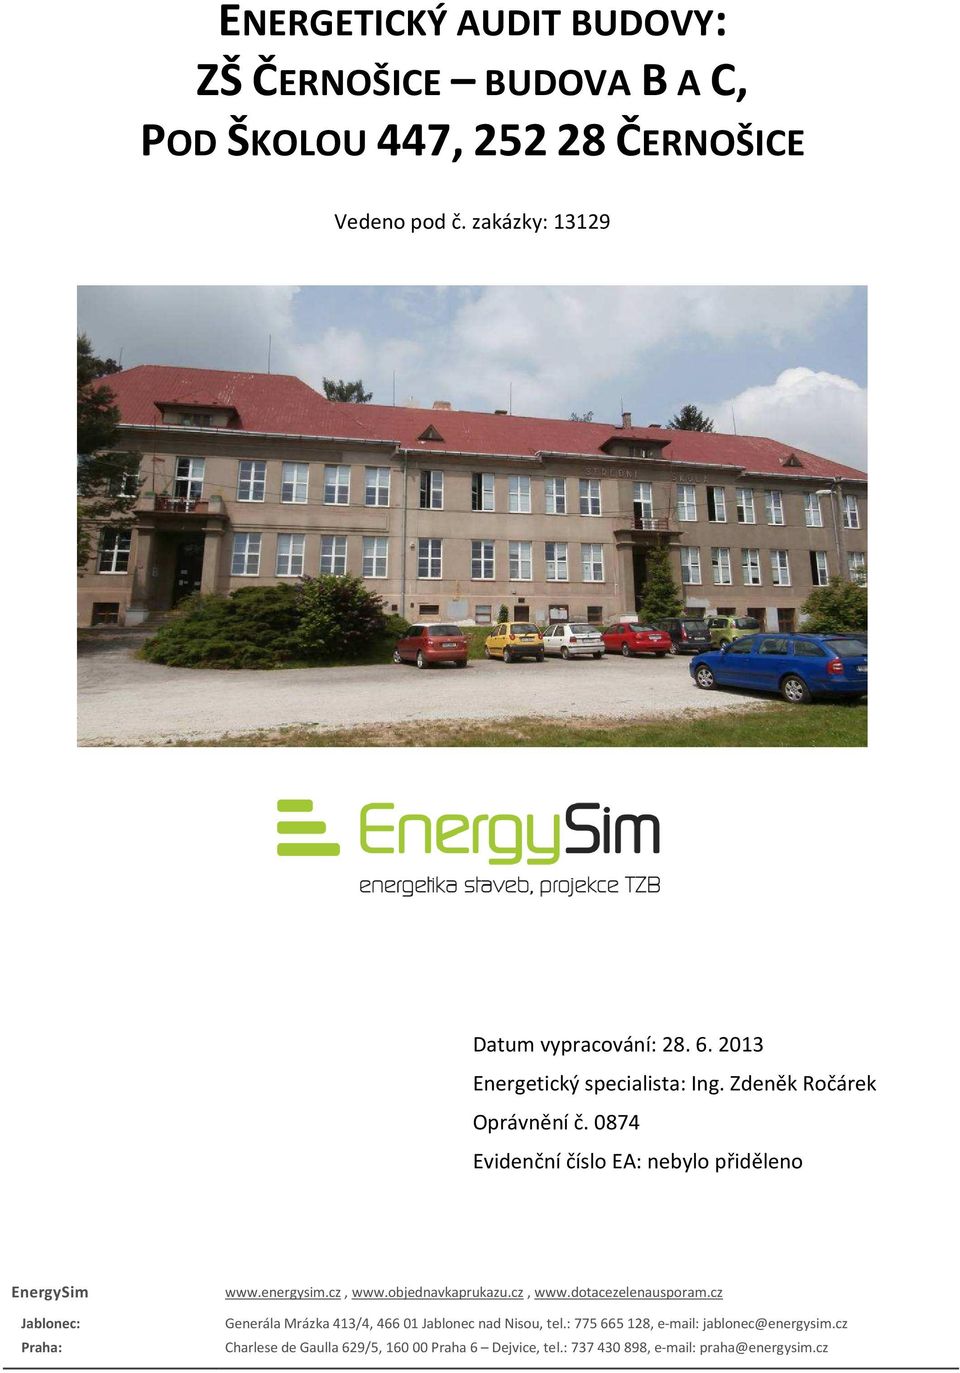 0874 Evidenční číslo EA: nebylo přiděleno EnergySim Jablonec: Praha: www.energysim.cz, www.objednavkaprukazu.cz, www.dotacezelenausporam.